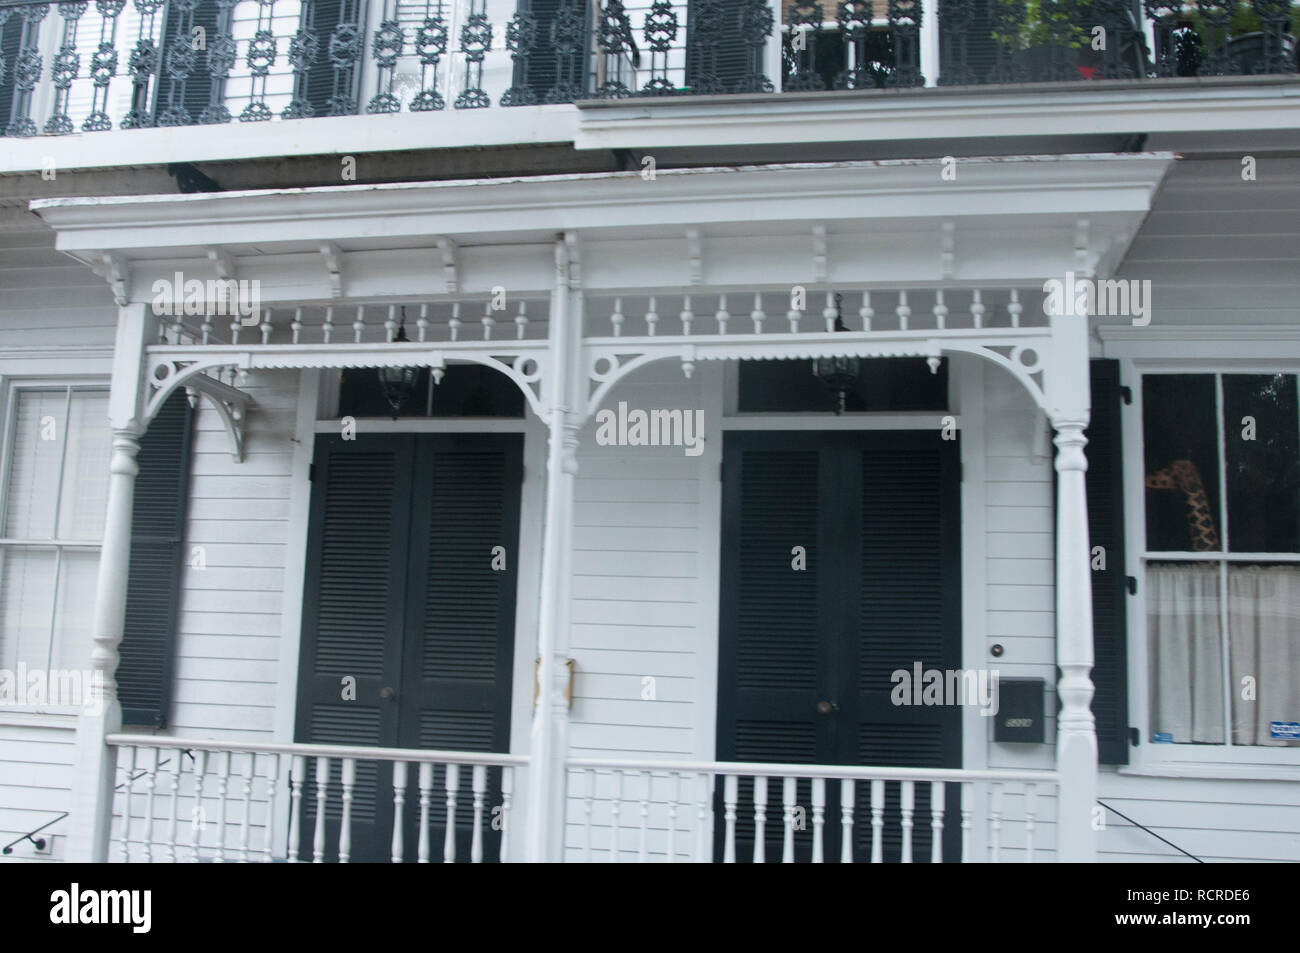 Savannah, GE: 10/19/18: Black door shutters and decorative porch railing woodwork on house in Savannah, GA Stock Photo